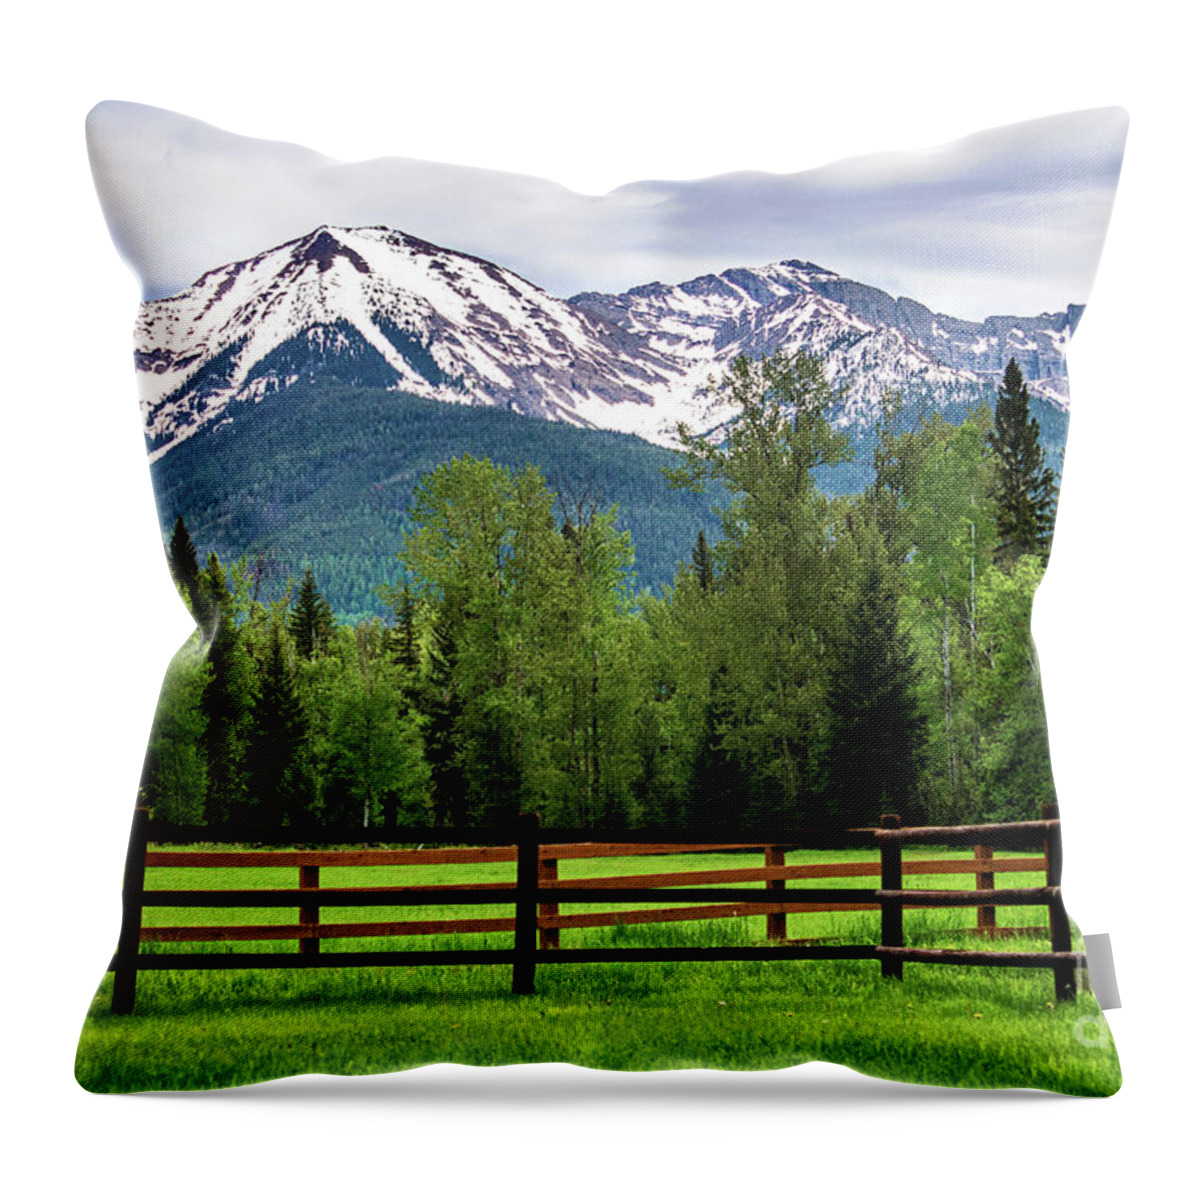 Montana Throw Pillow featuring the photograph Condon, Mt. Swan Mountain Range by Janie Johnson